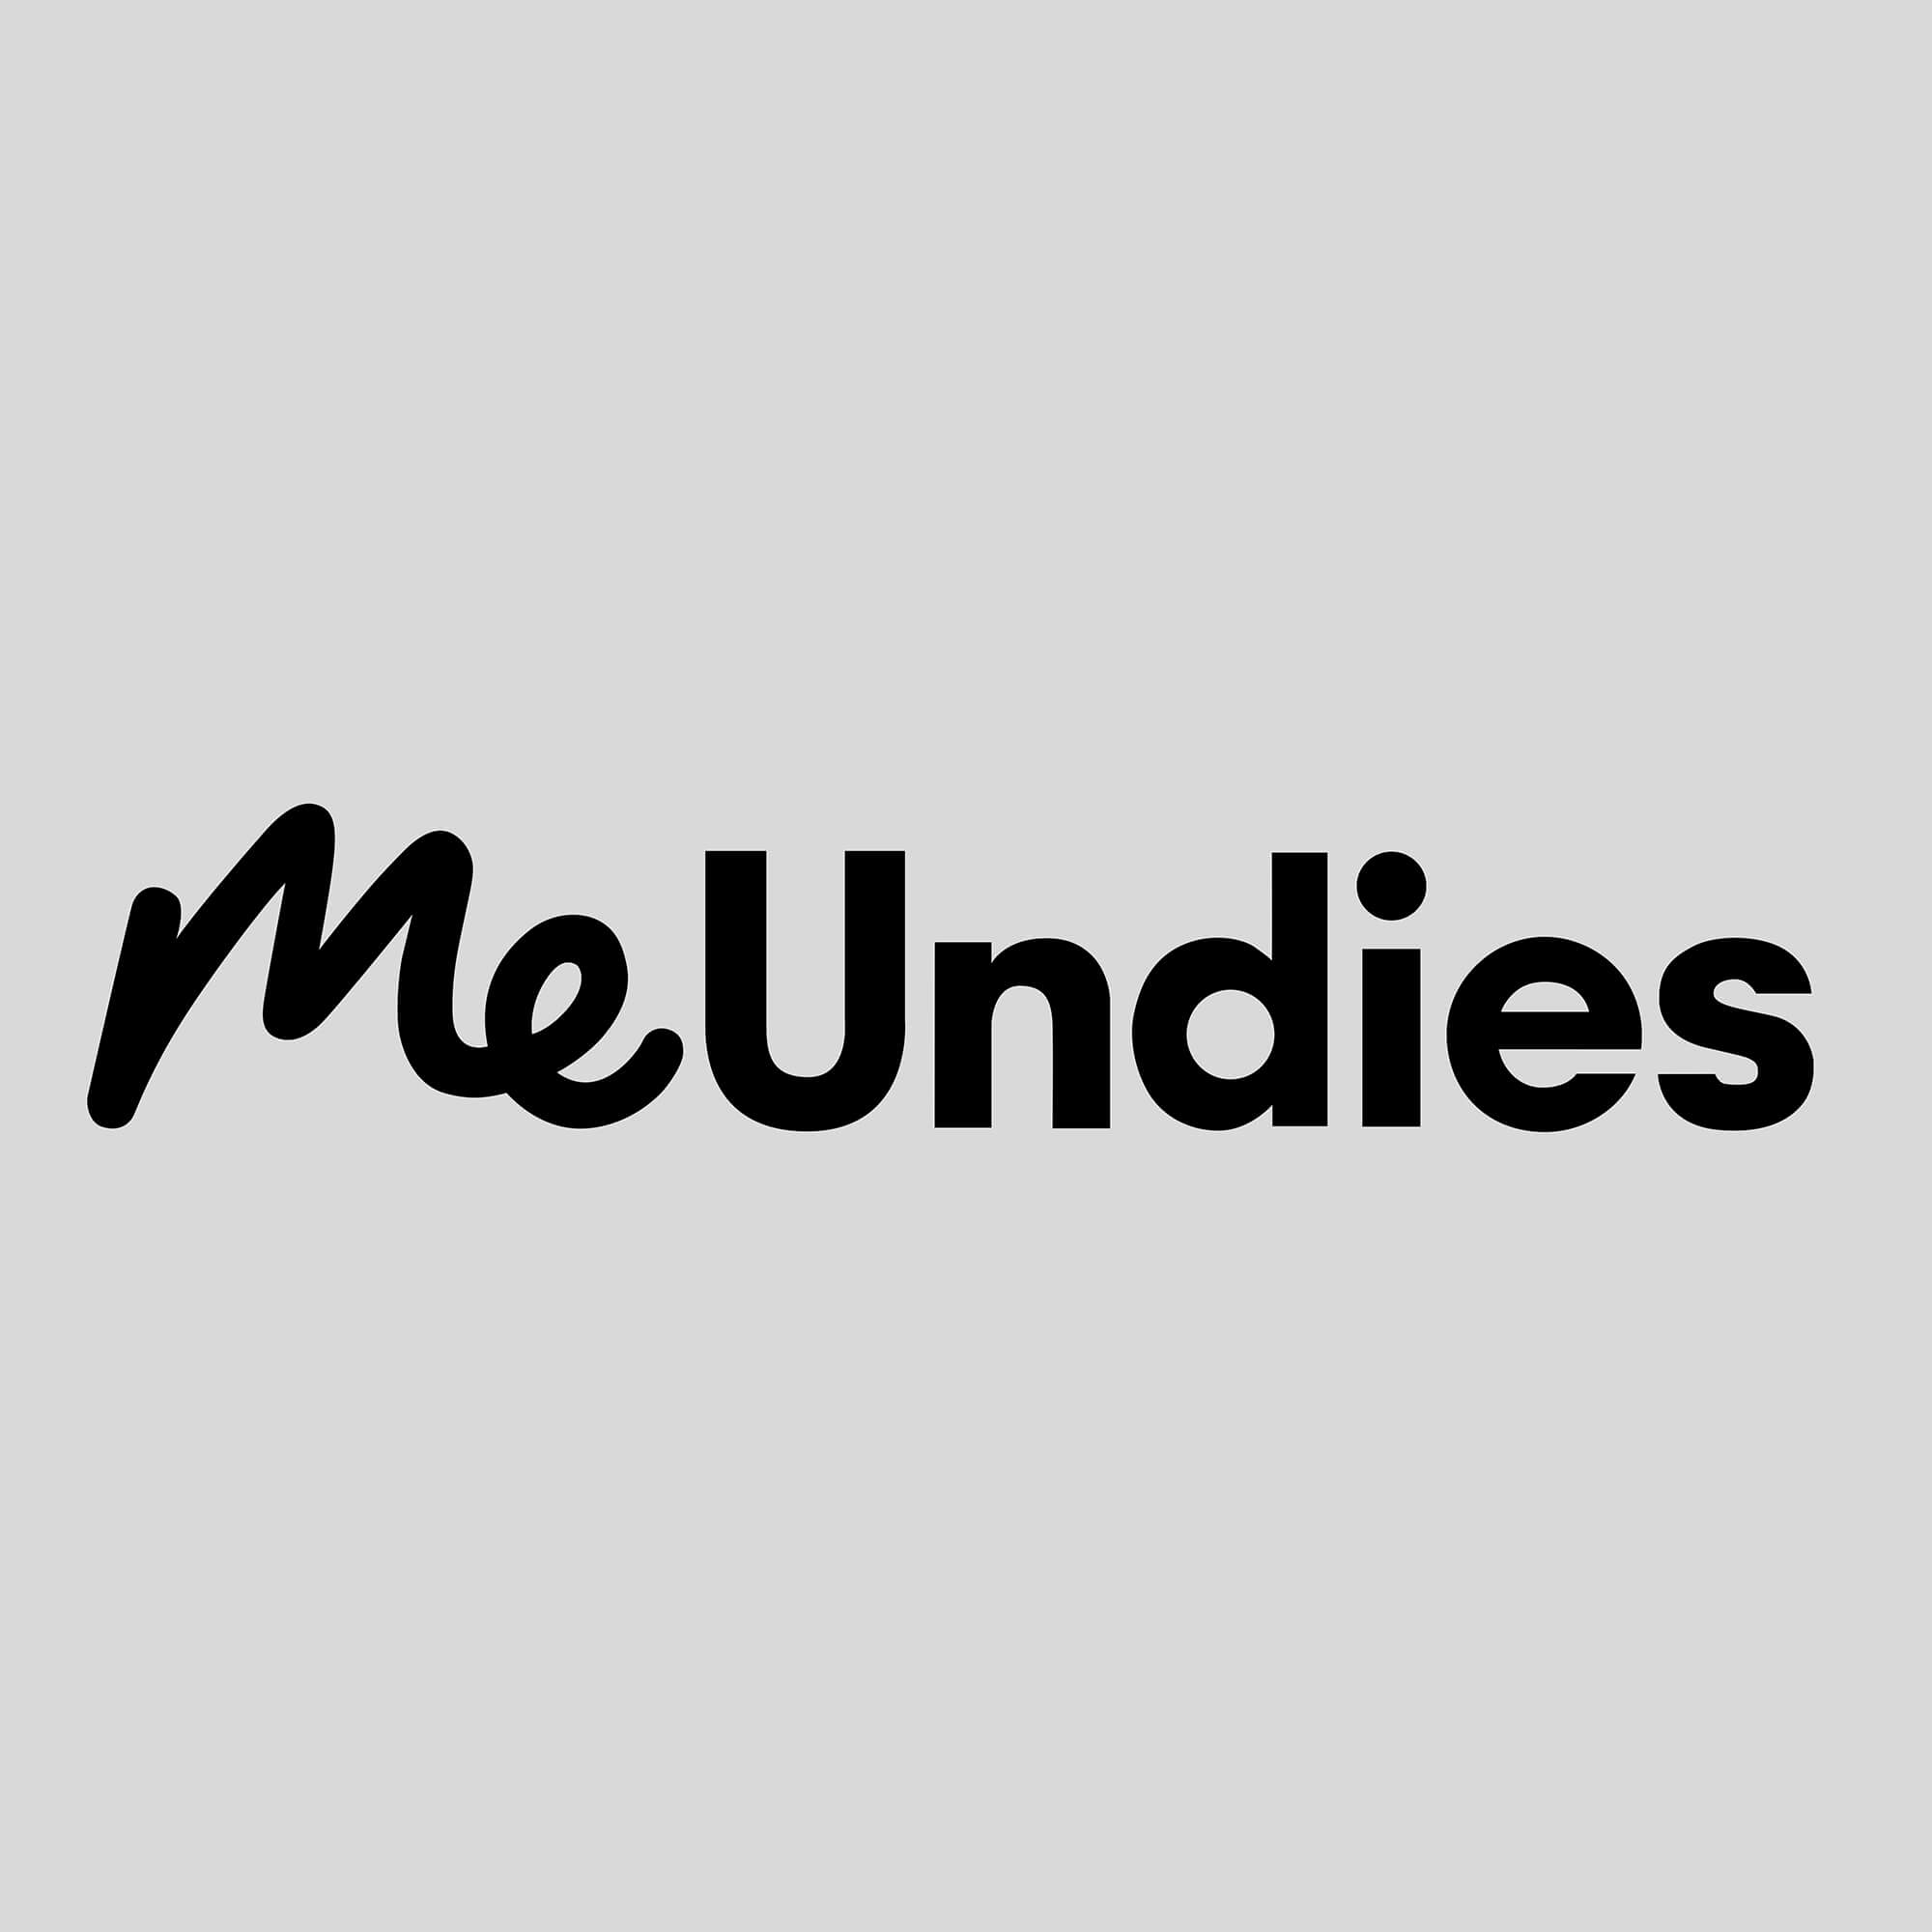 MeUndies underwear subscription